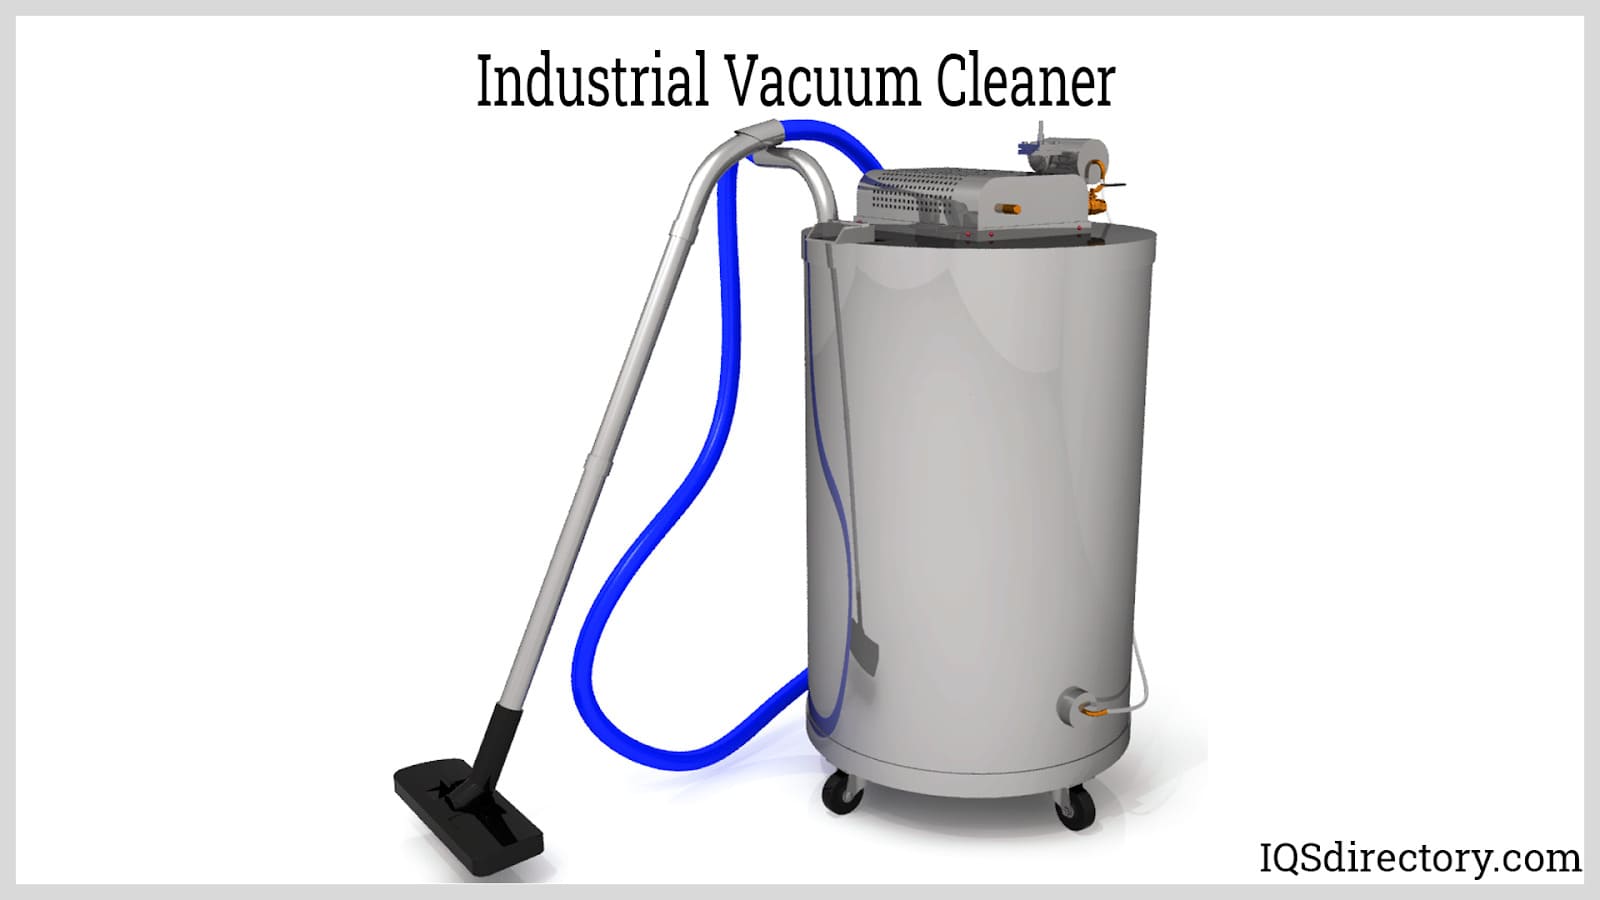 https://www.iqsdirectory.com/articles/vacuum-cleaner/industrial-vacuum-cleaners/industrial-vacuum-cleaner.jpg